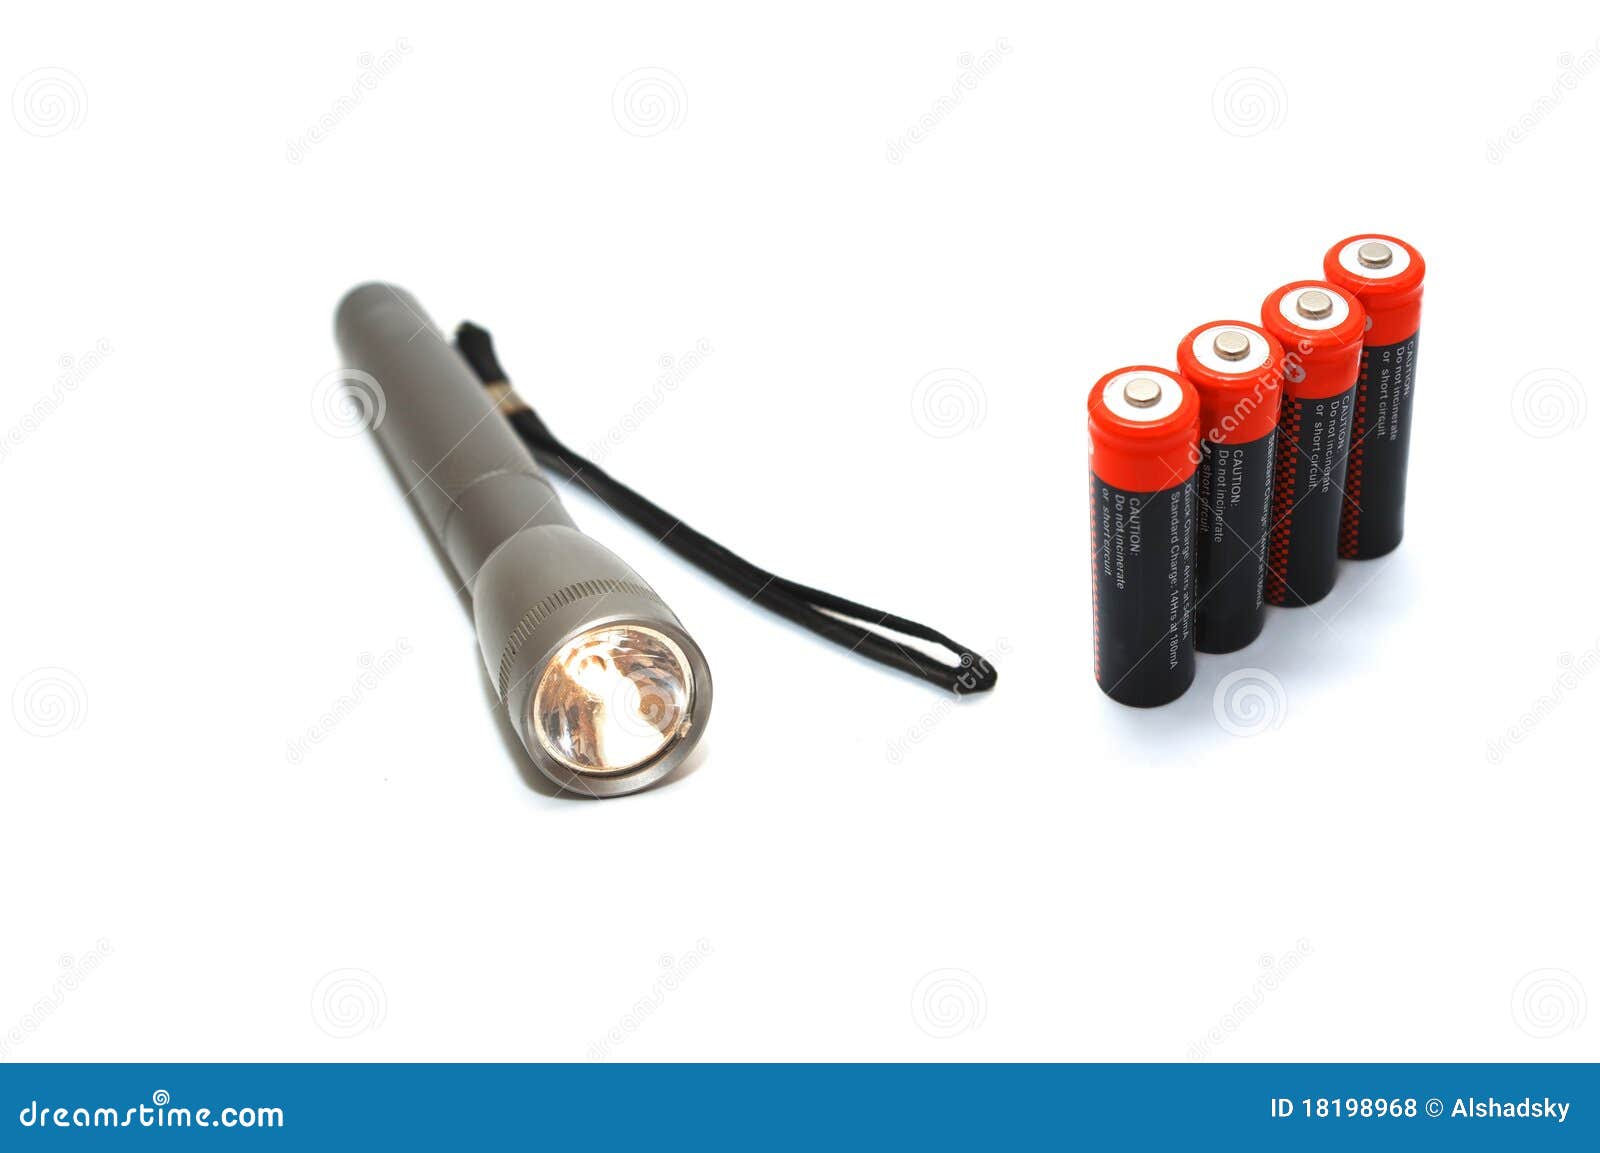 https://thumbs.dreamstime.com/z/flashlight-batteries-18198968.jpg